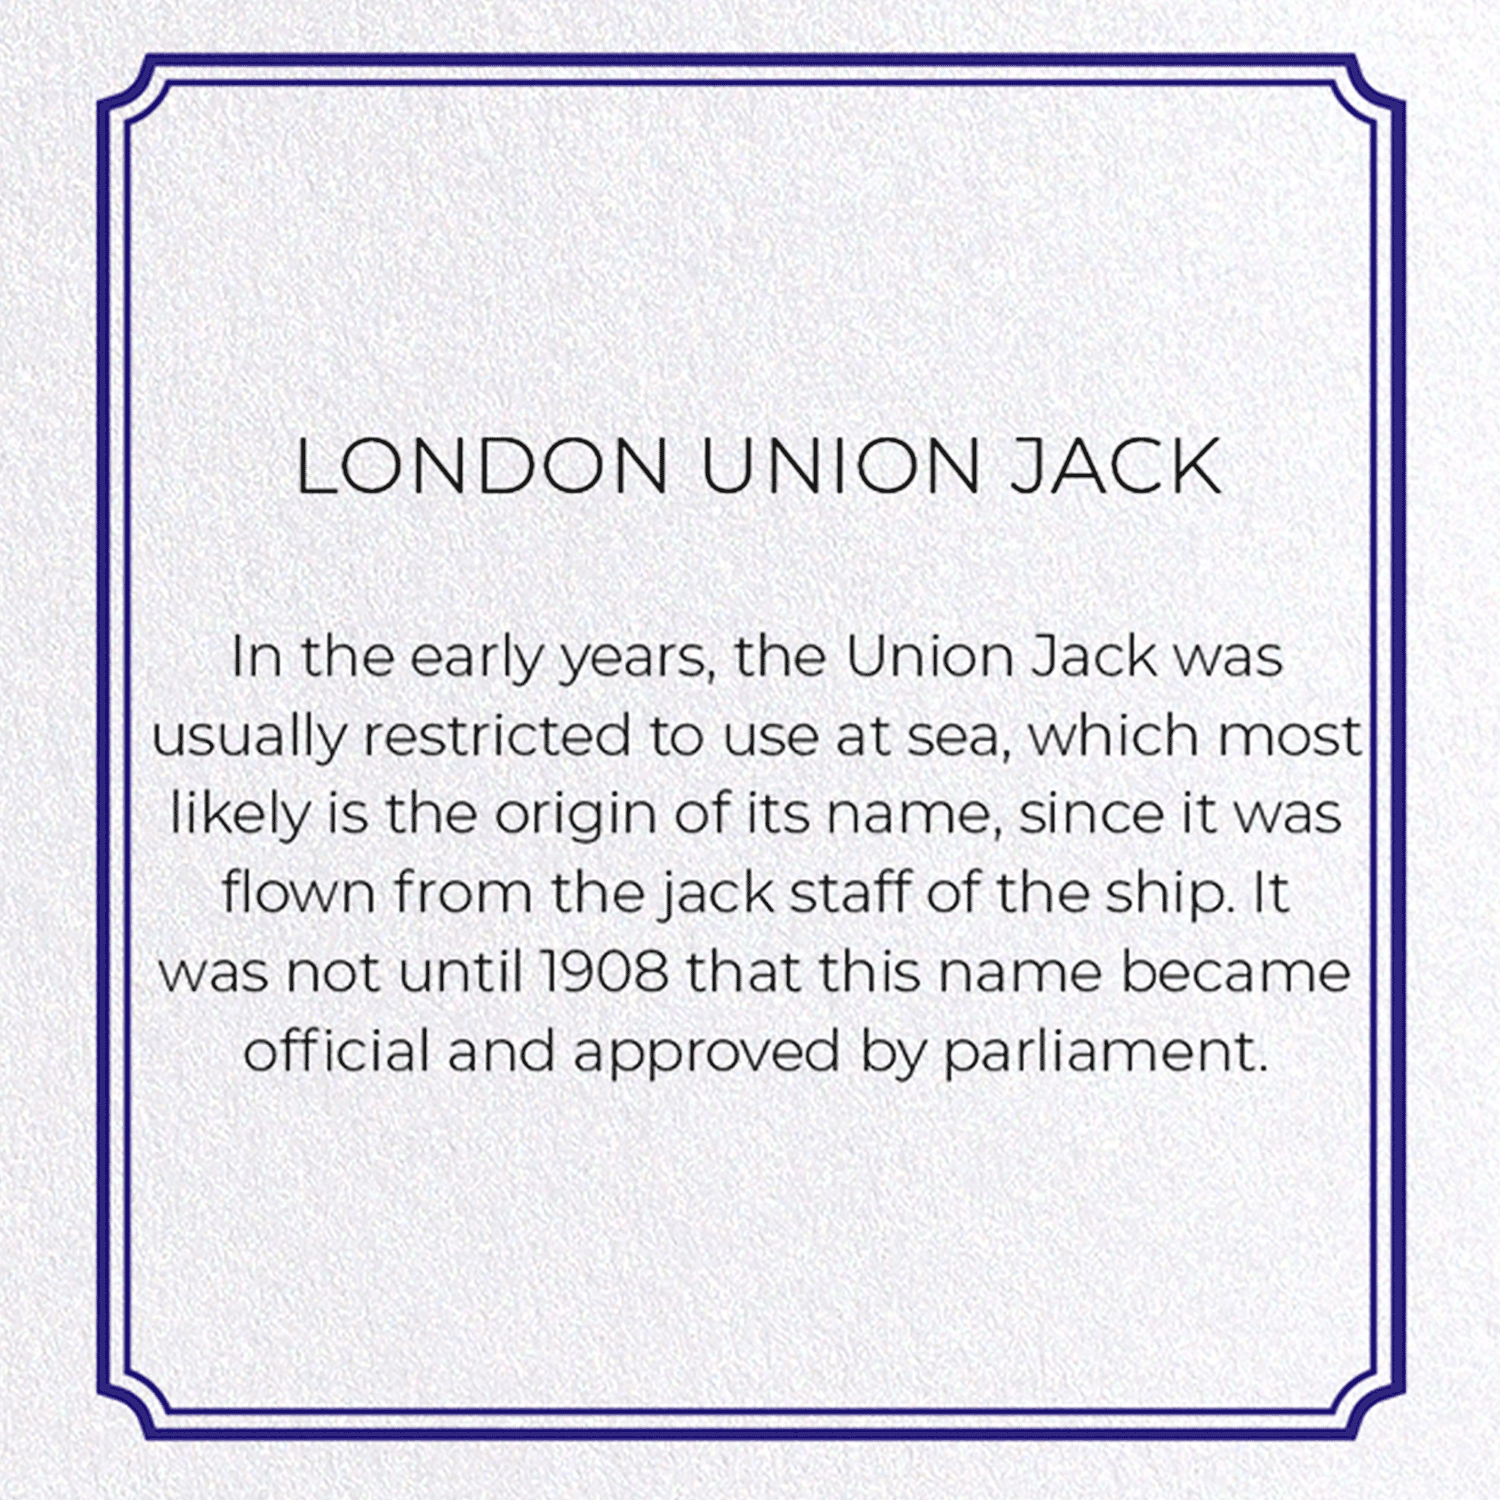 LONDON UNION JACK